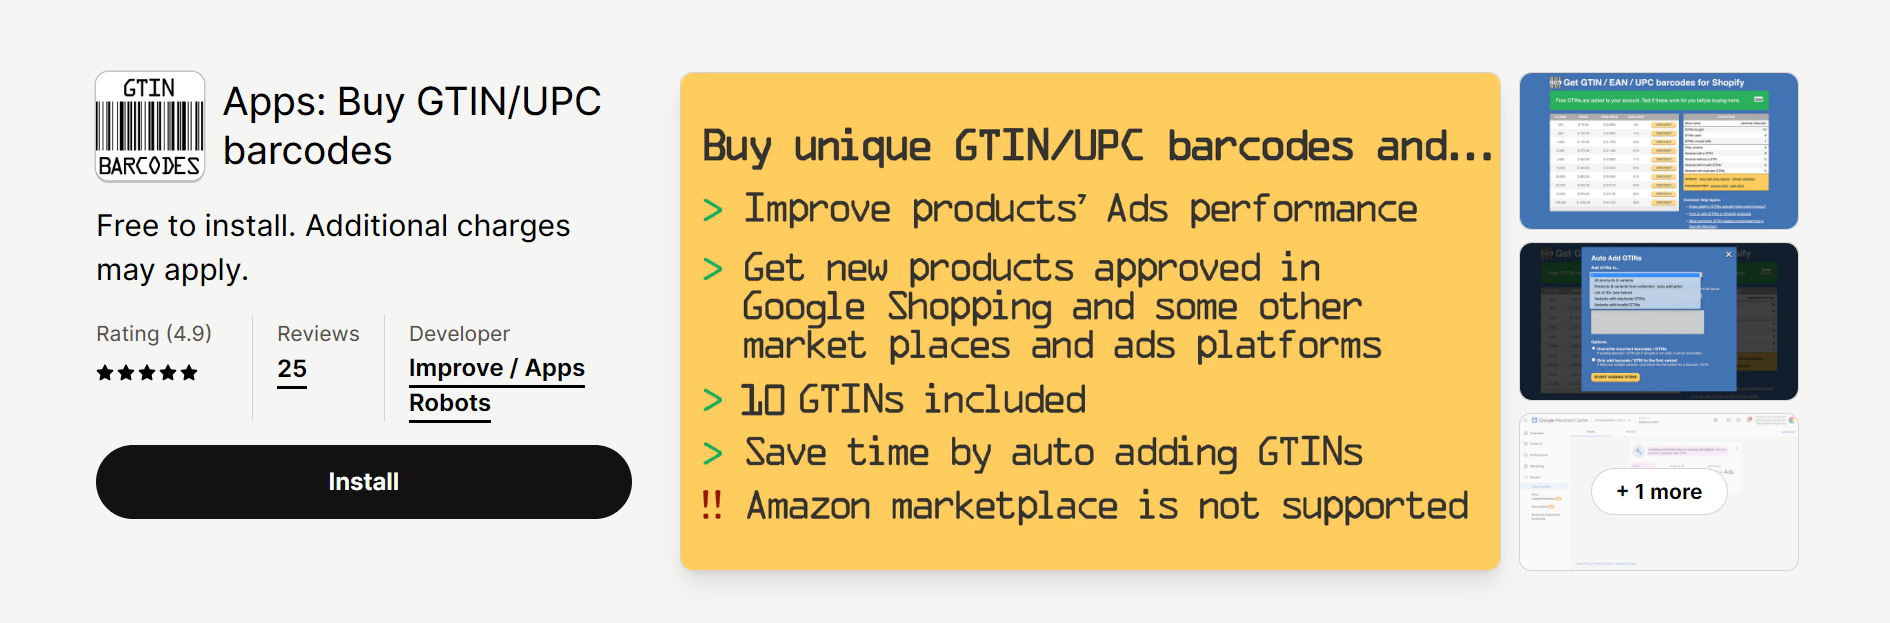 Apps: Buy GTIN/UPC barcodes